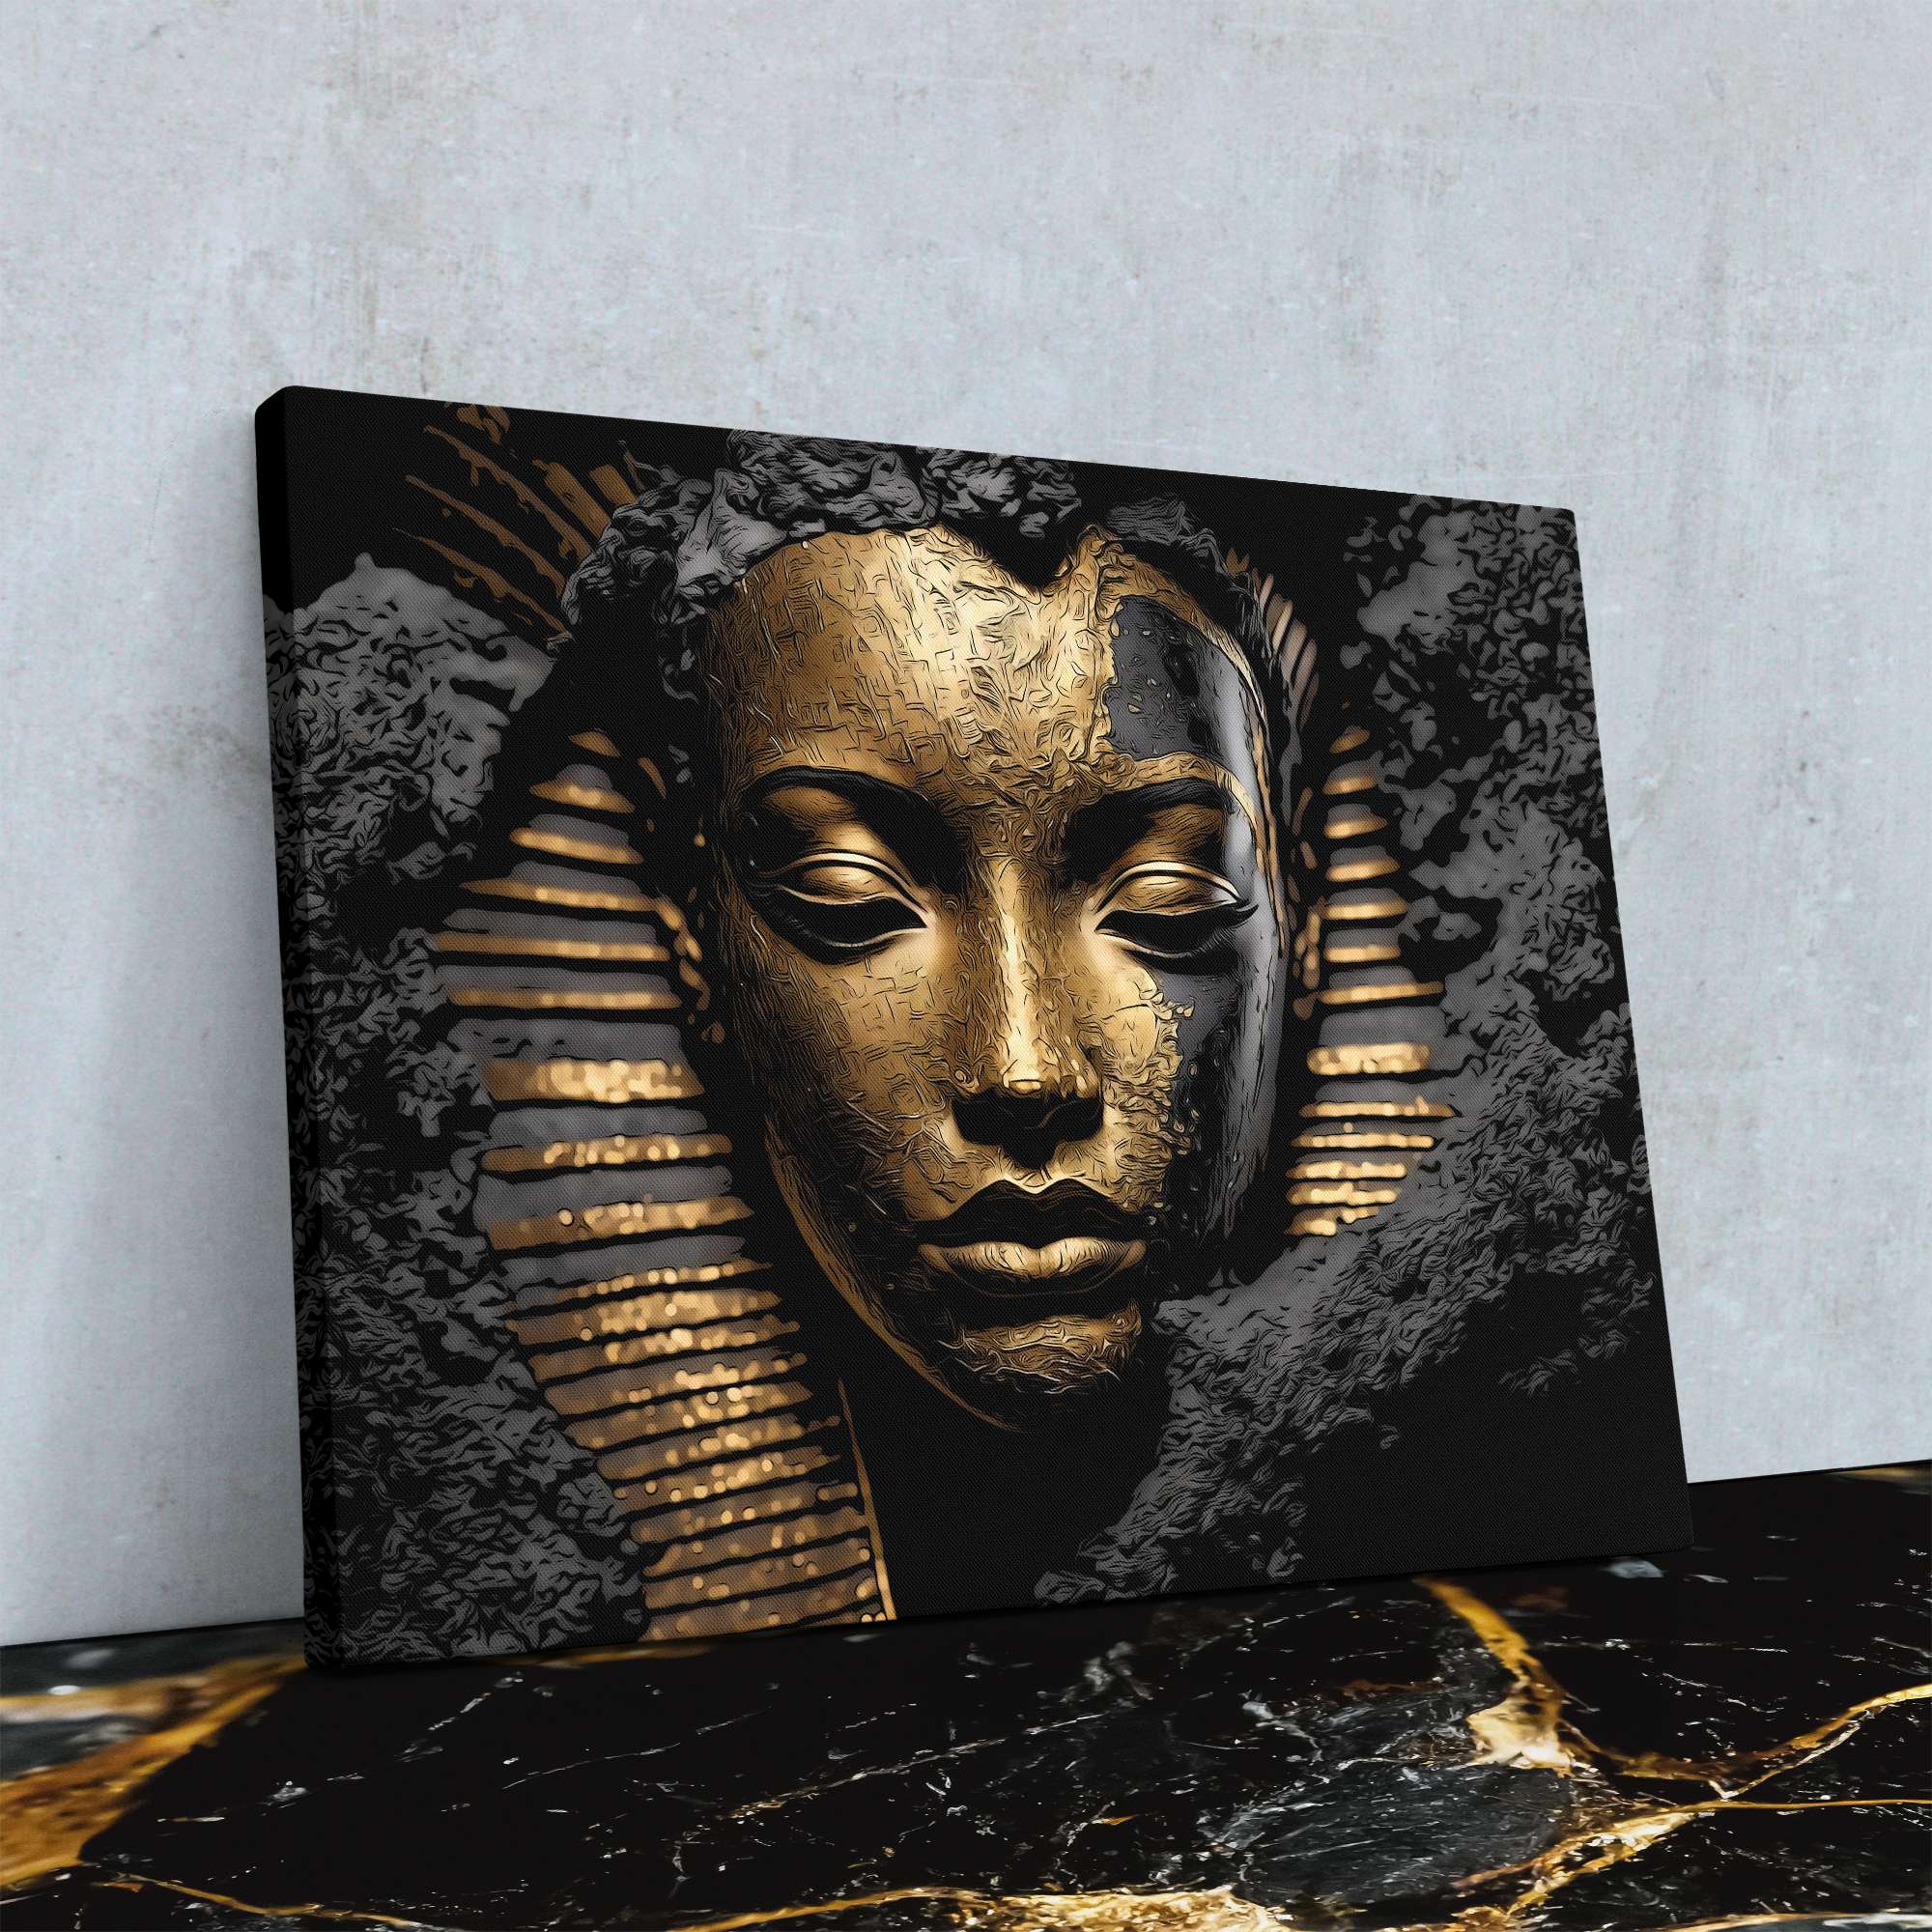 Egyptian Pharaoh Queen - Luxury Wall Art